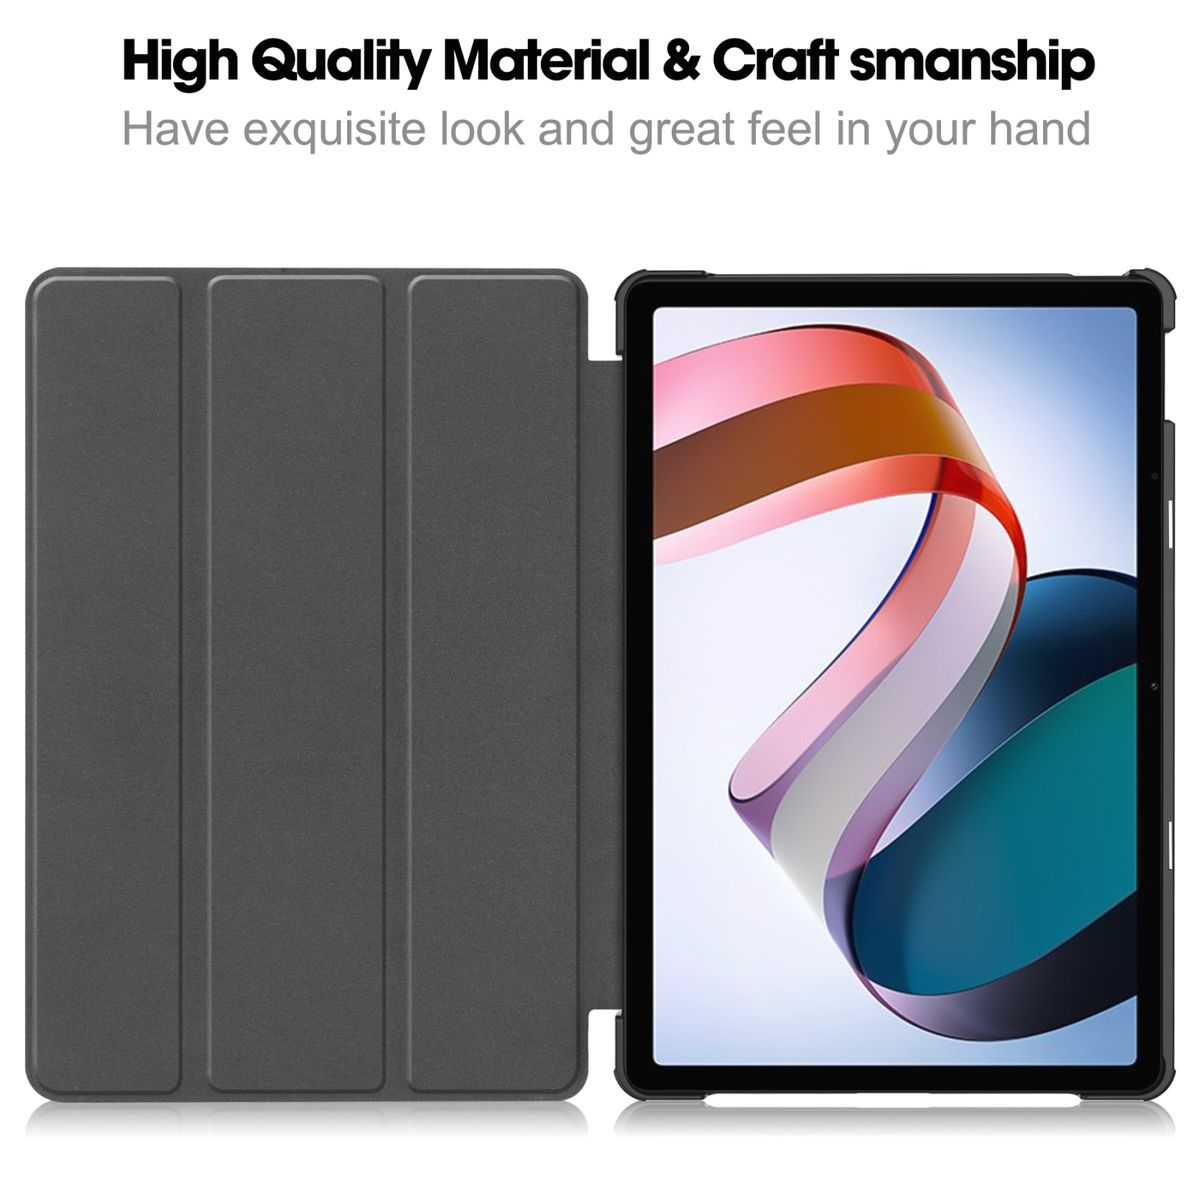 Kunststoff Full 3folt / Wake & Schwarz Cover Tablethülle WIGENTO Cover Xiaomi aufstellbar Silikon für Sleep / Kunstleder, UP